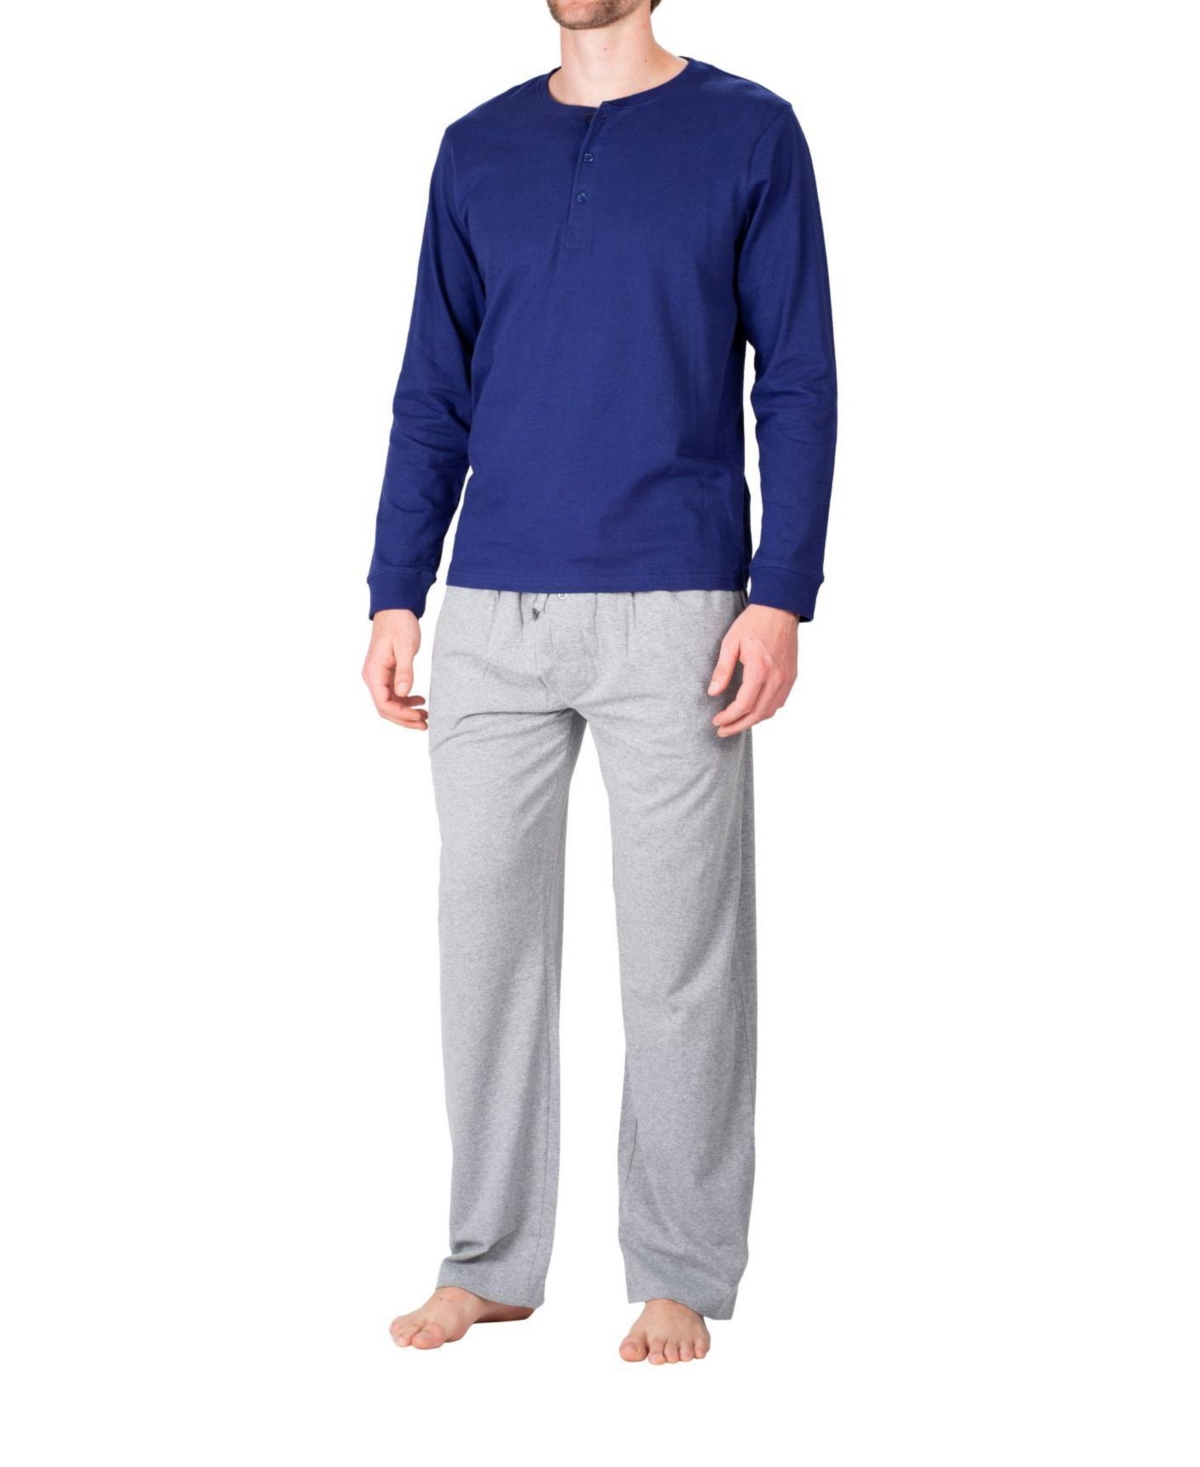 Sleep Hero Men's Knit Long Sleeve Pajama Set - Navy and grey